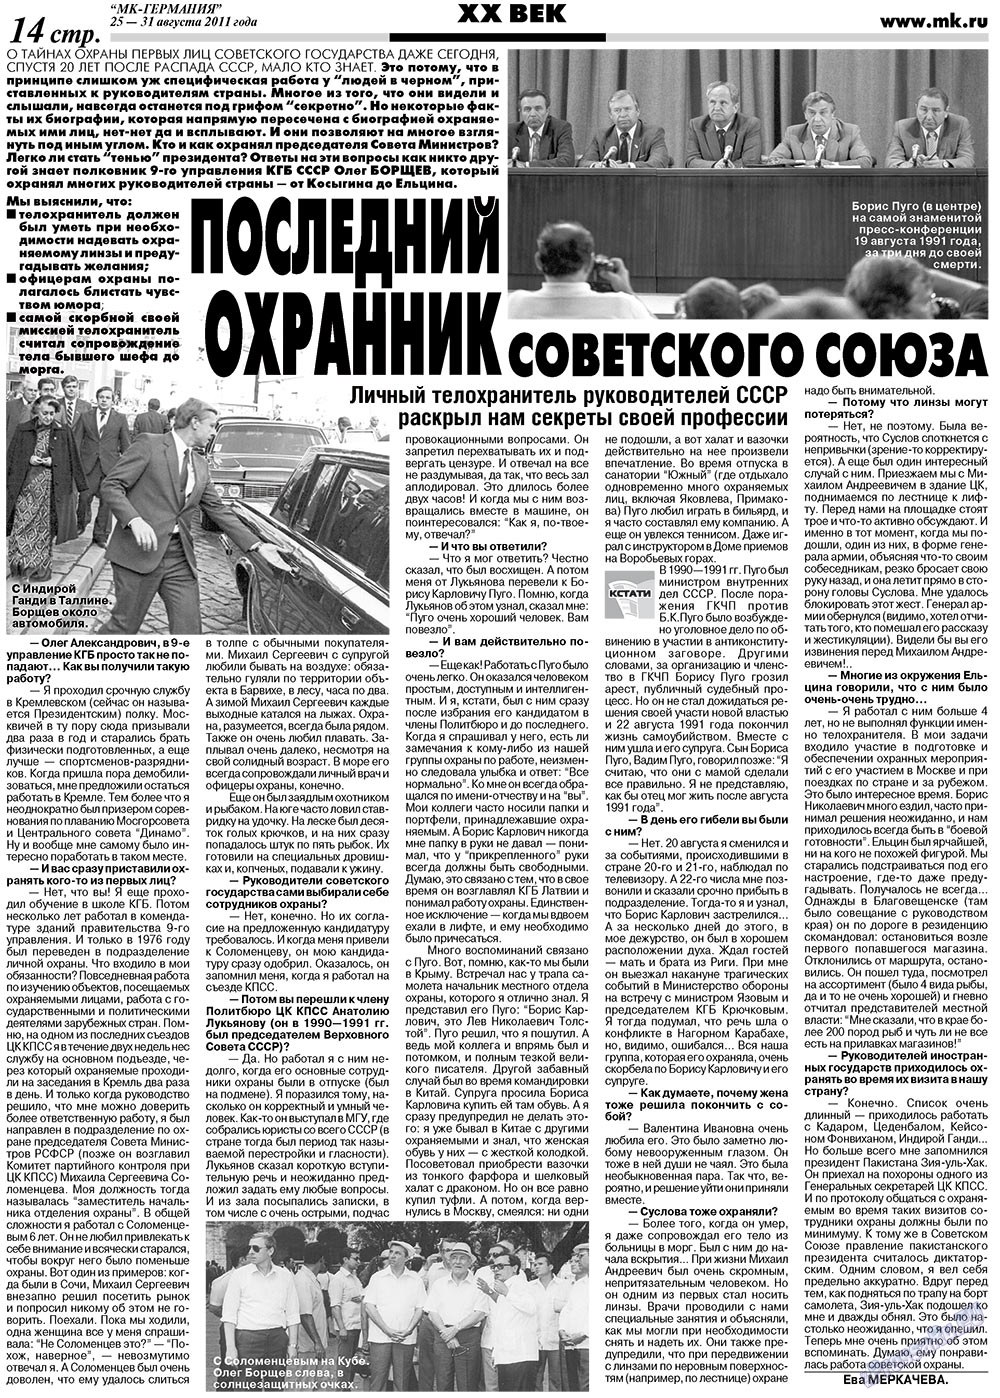 МК-Германия, газета. 2011 №34 стр.14